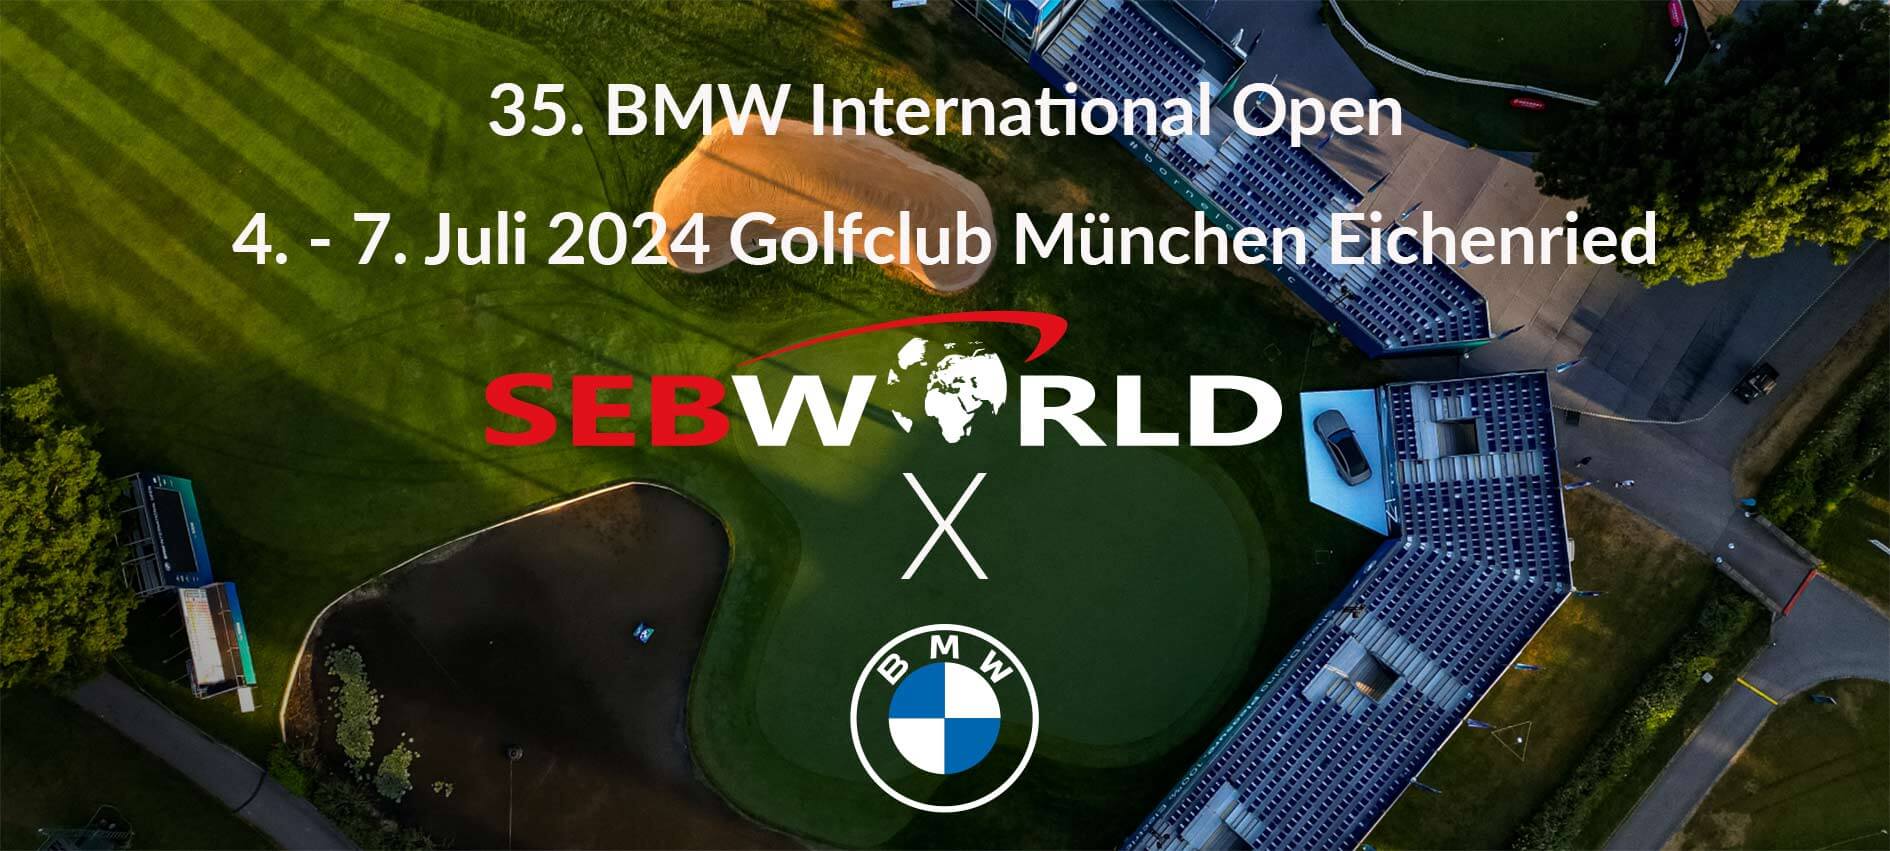 media/image/BMW-Sebworld-1.jpg